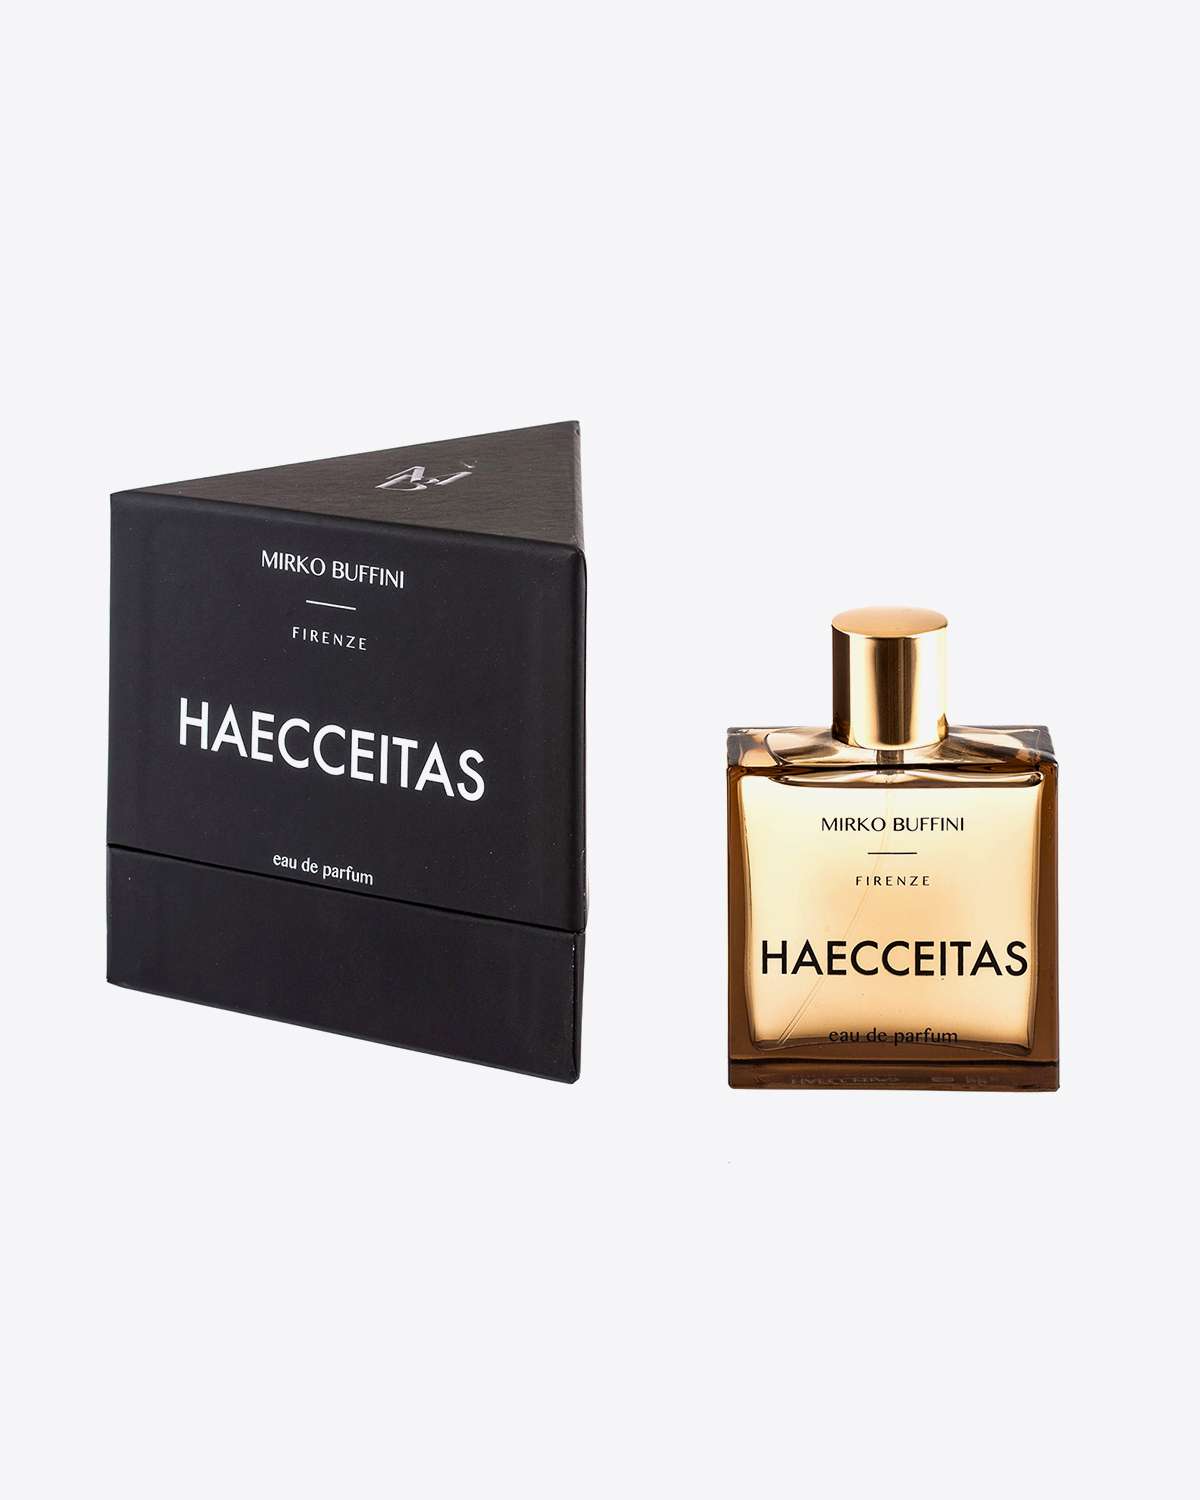 Parfum Haecceitas Mirko Buffini. Flacon 100 ml vendu avec sa boite triangulaire noire.